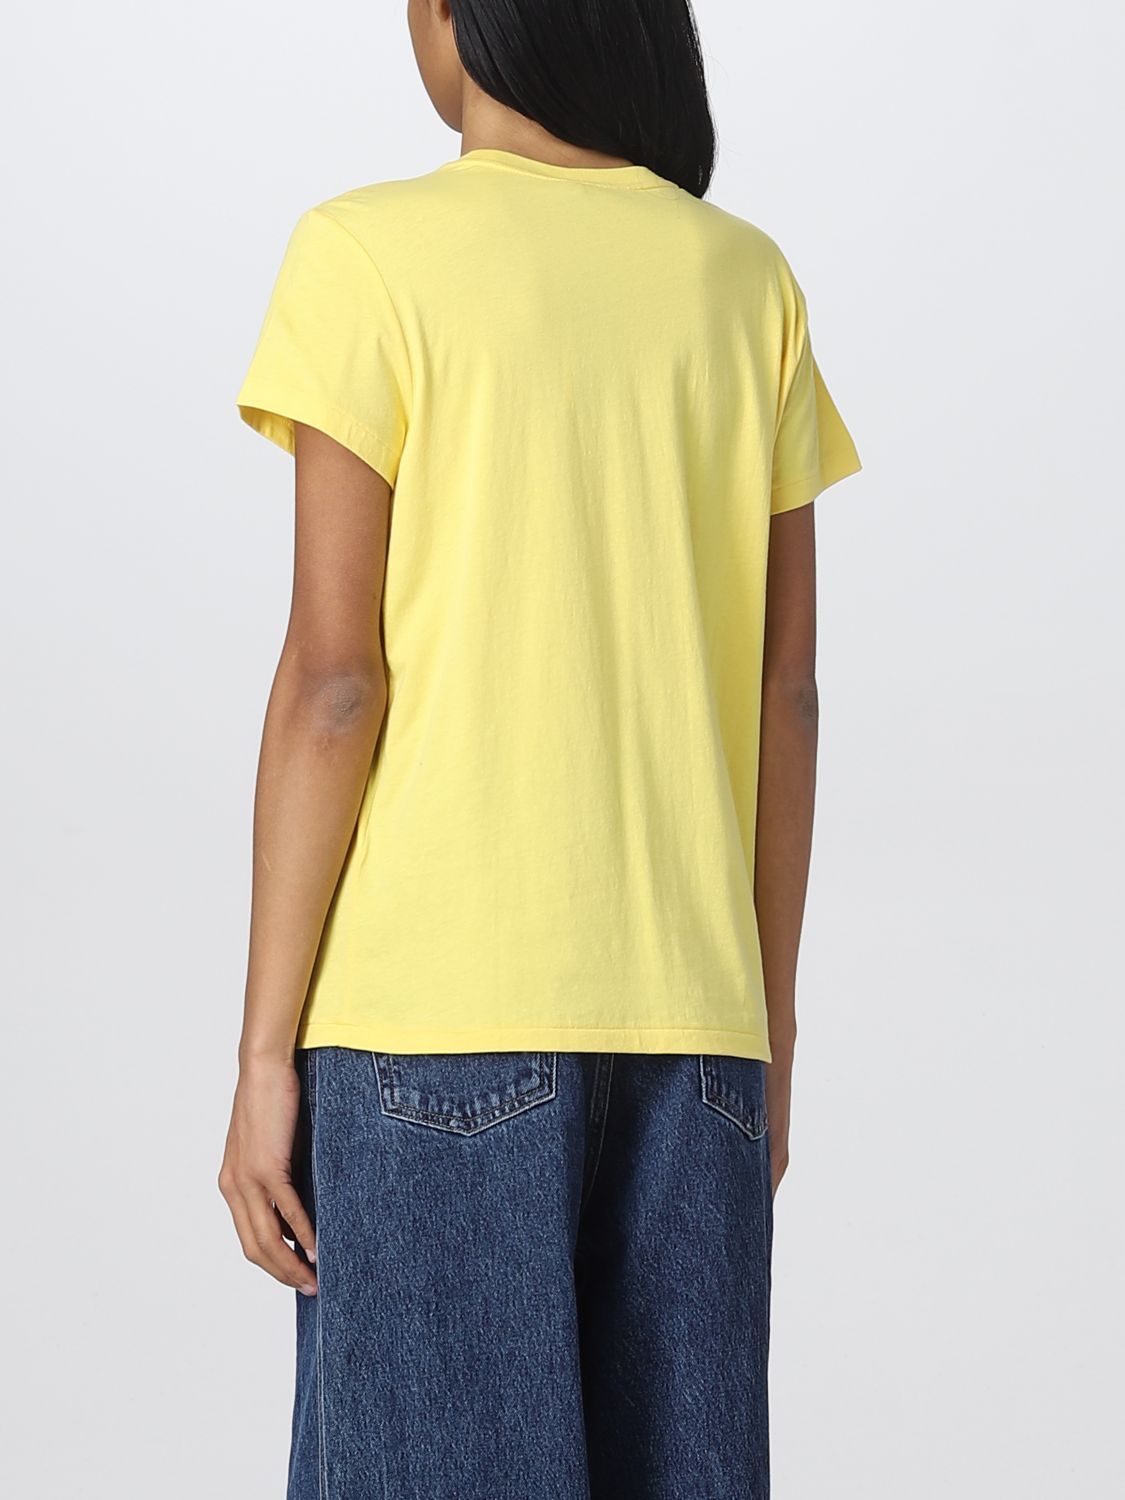 POLO RALPH LAUREN: t-shirt for woman - Yellow | Polo Ralph Lauren t-shirt  211898698 online on 